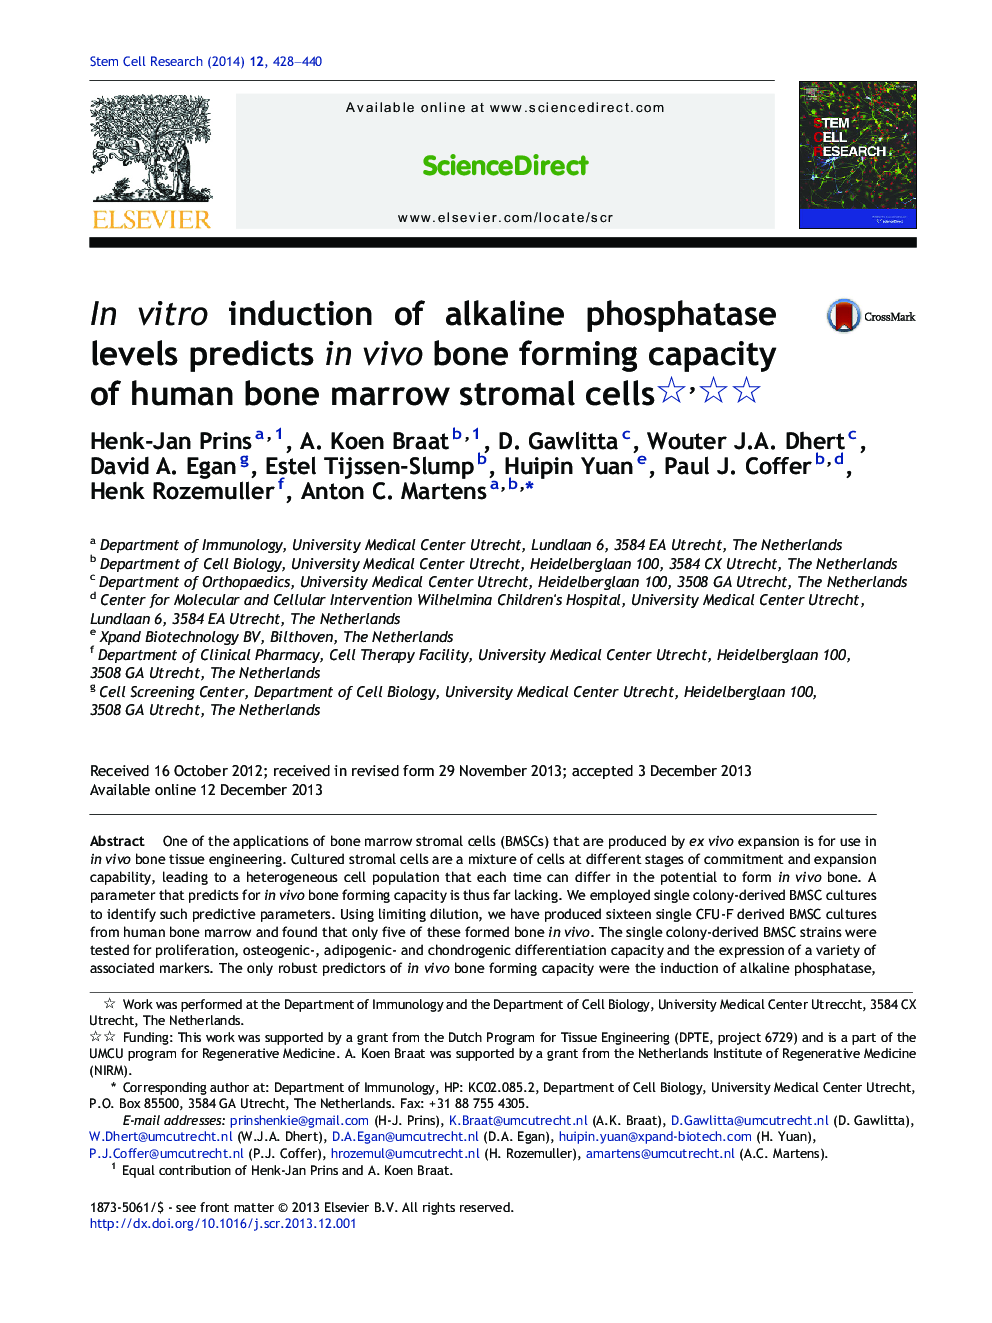 In vitro induction of alkaline phosphatase levels predicts in vivo bone forming capacity of human bone marrow stromal cells 